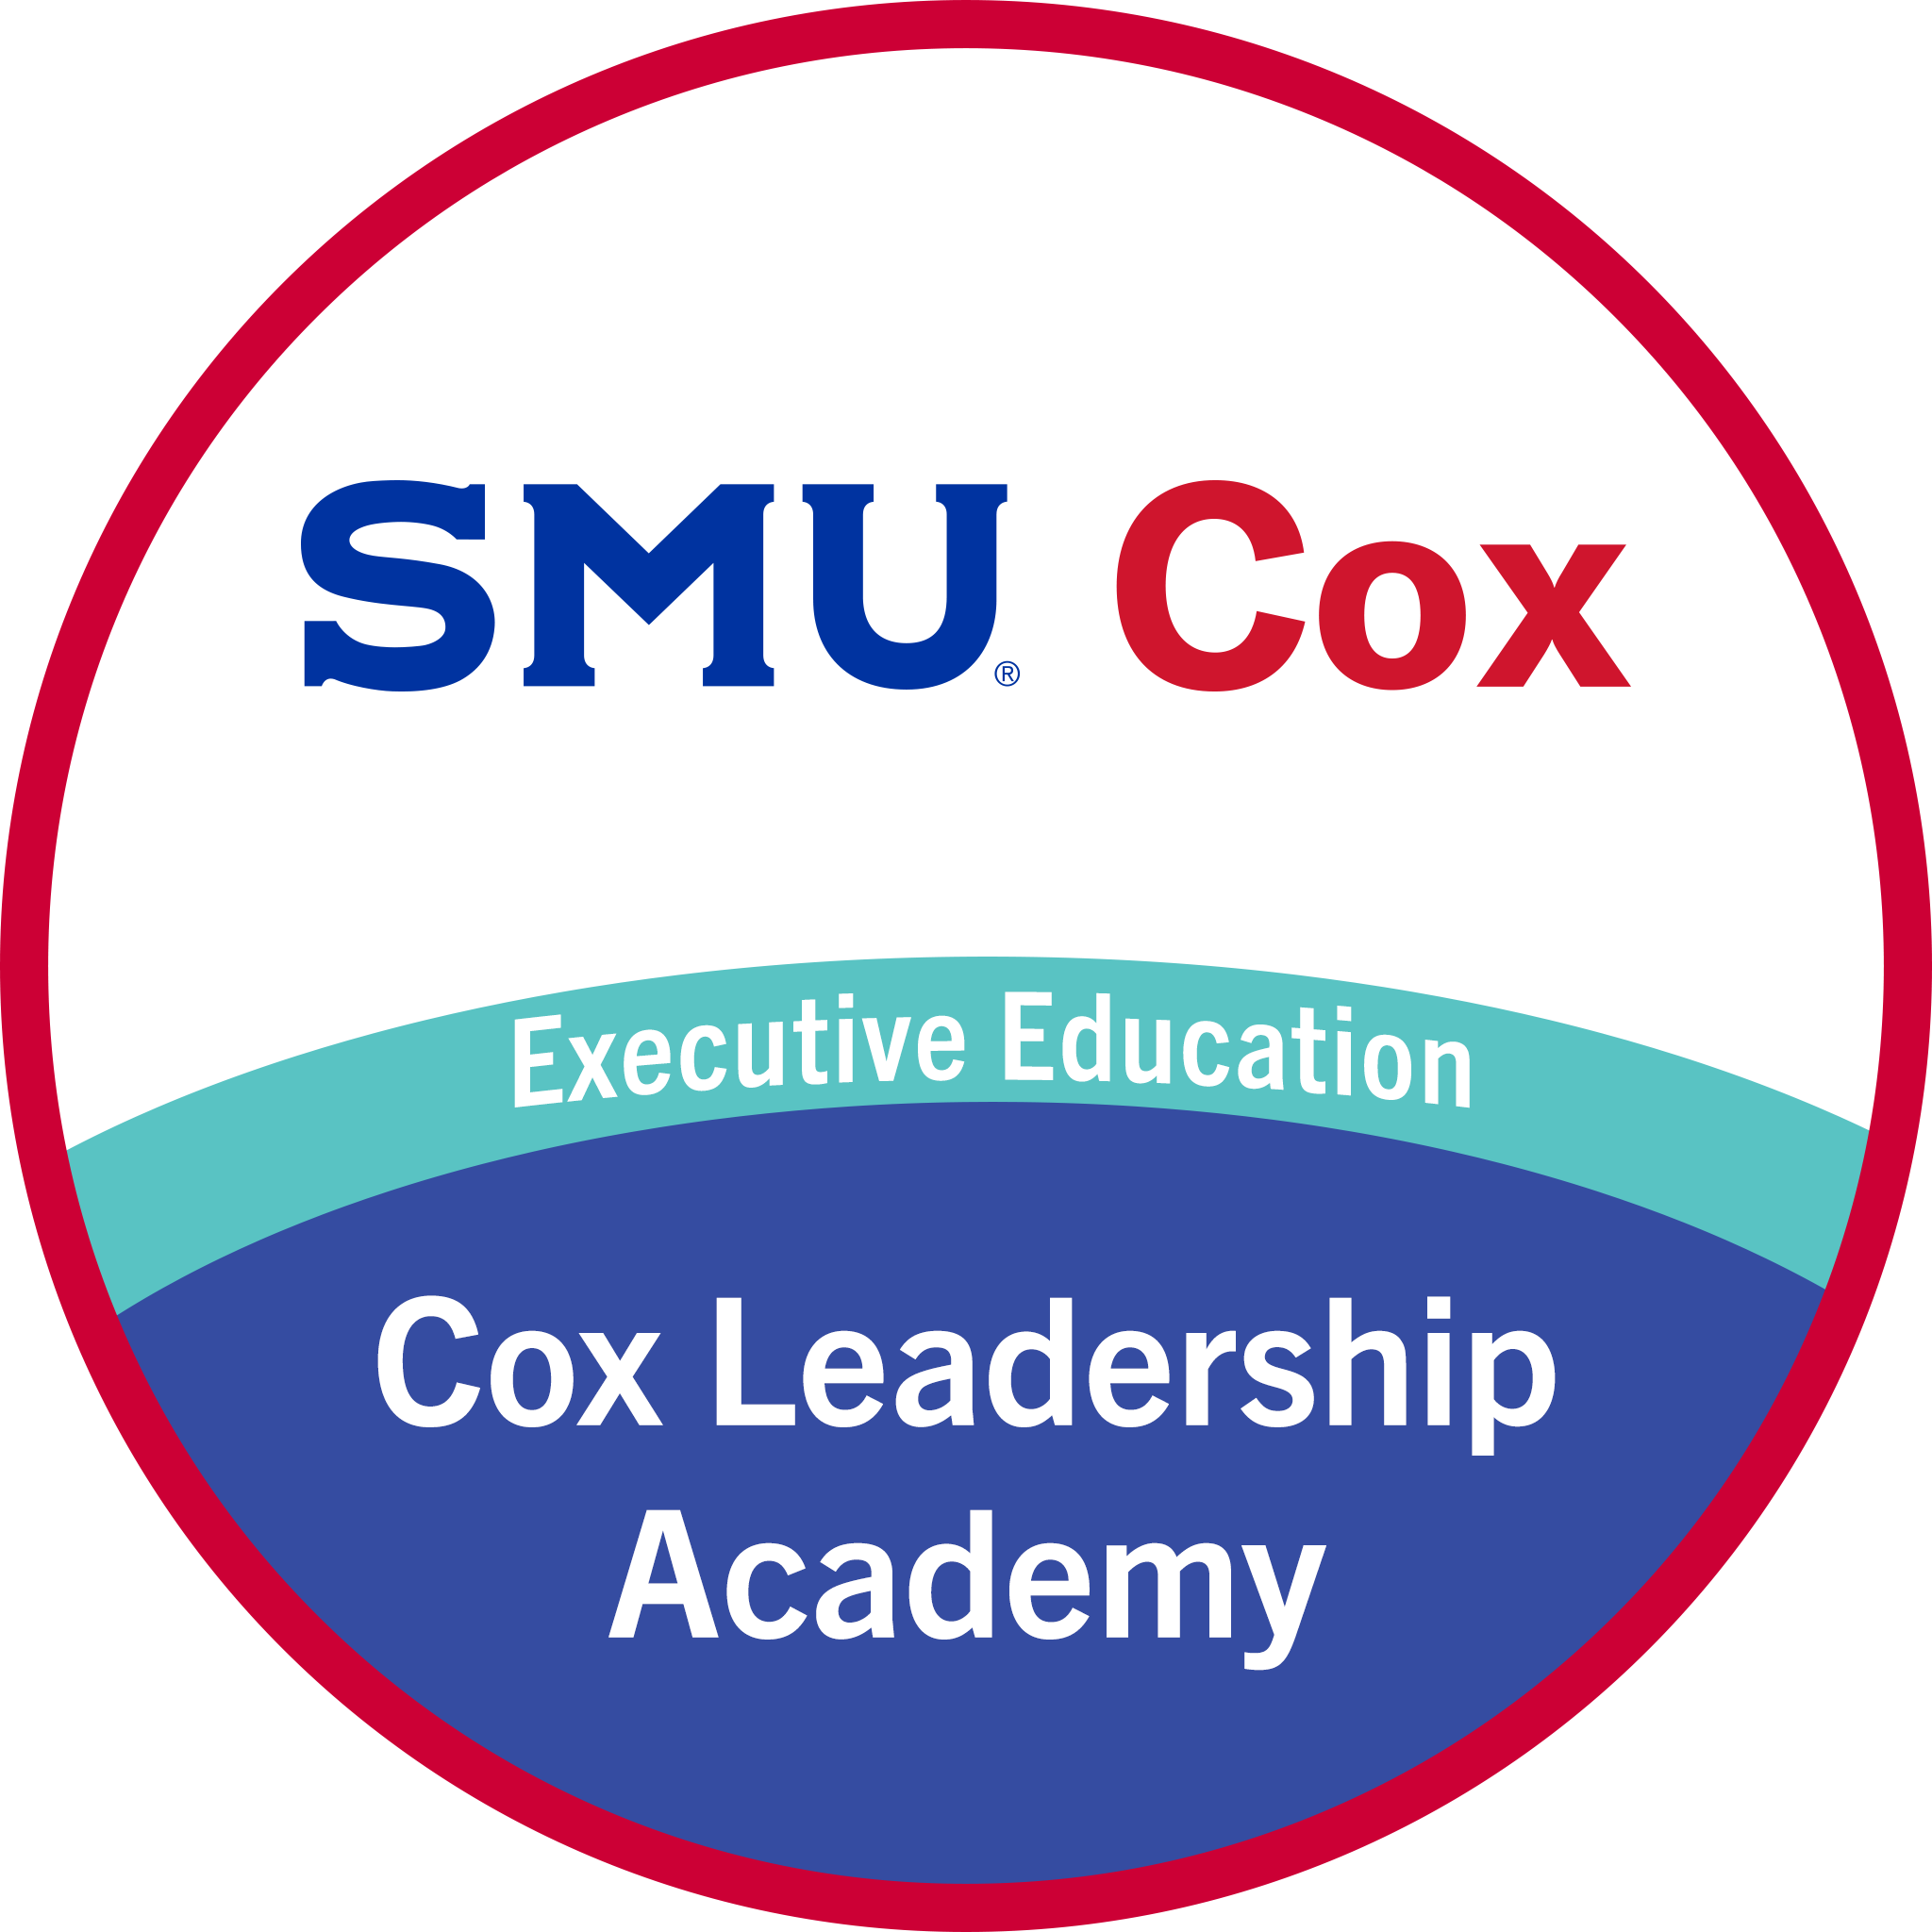 CredlyBadge - Cox Leadership Academy